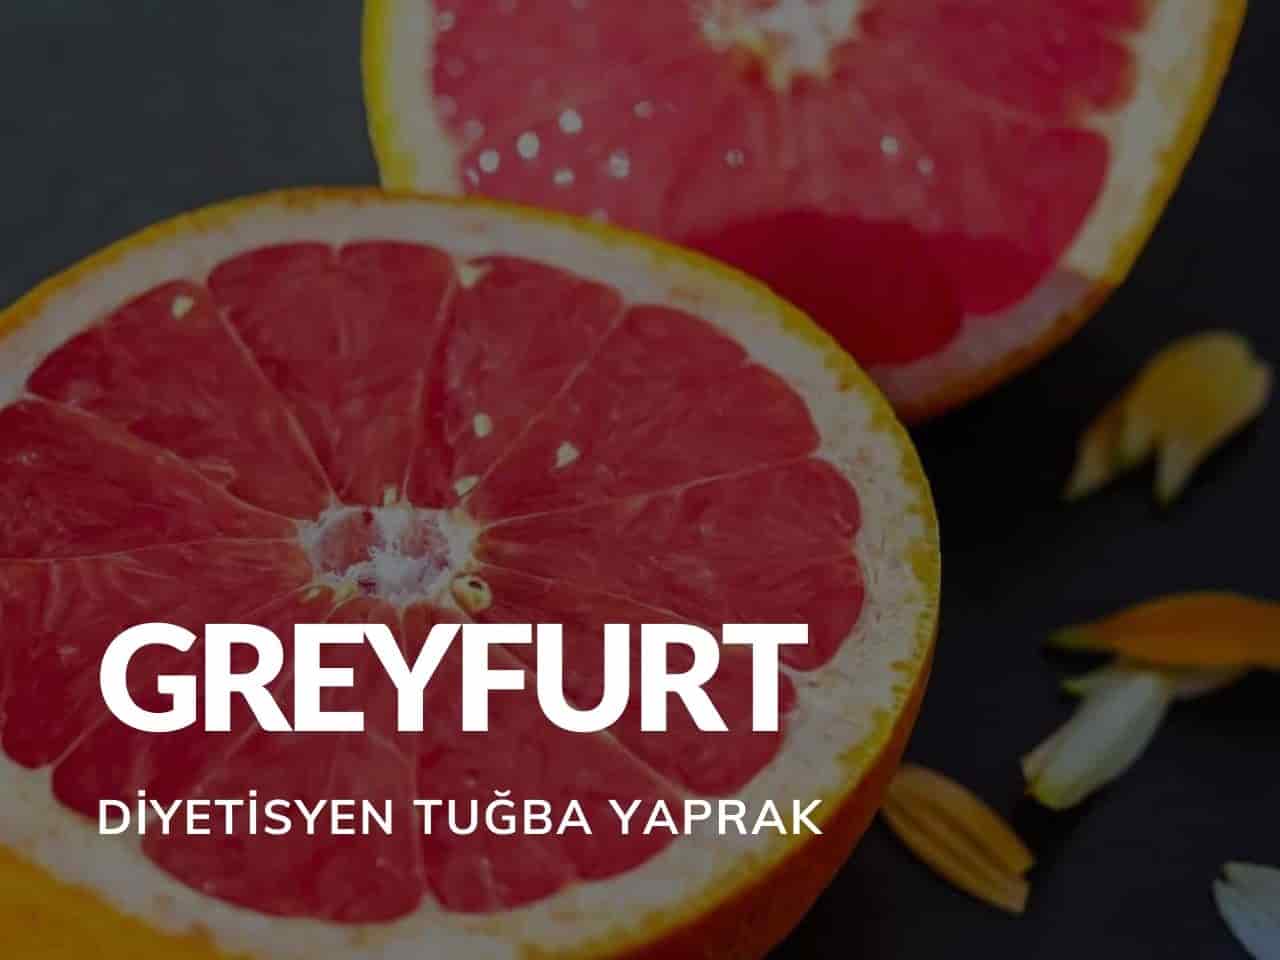 Greyfurt